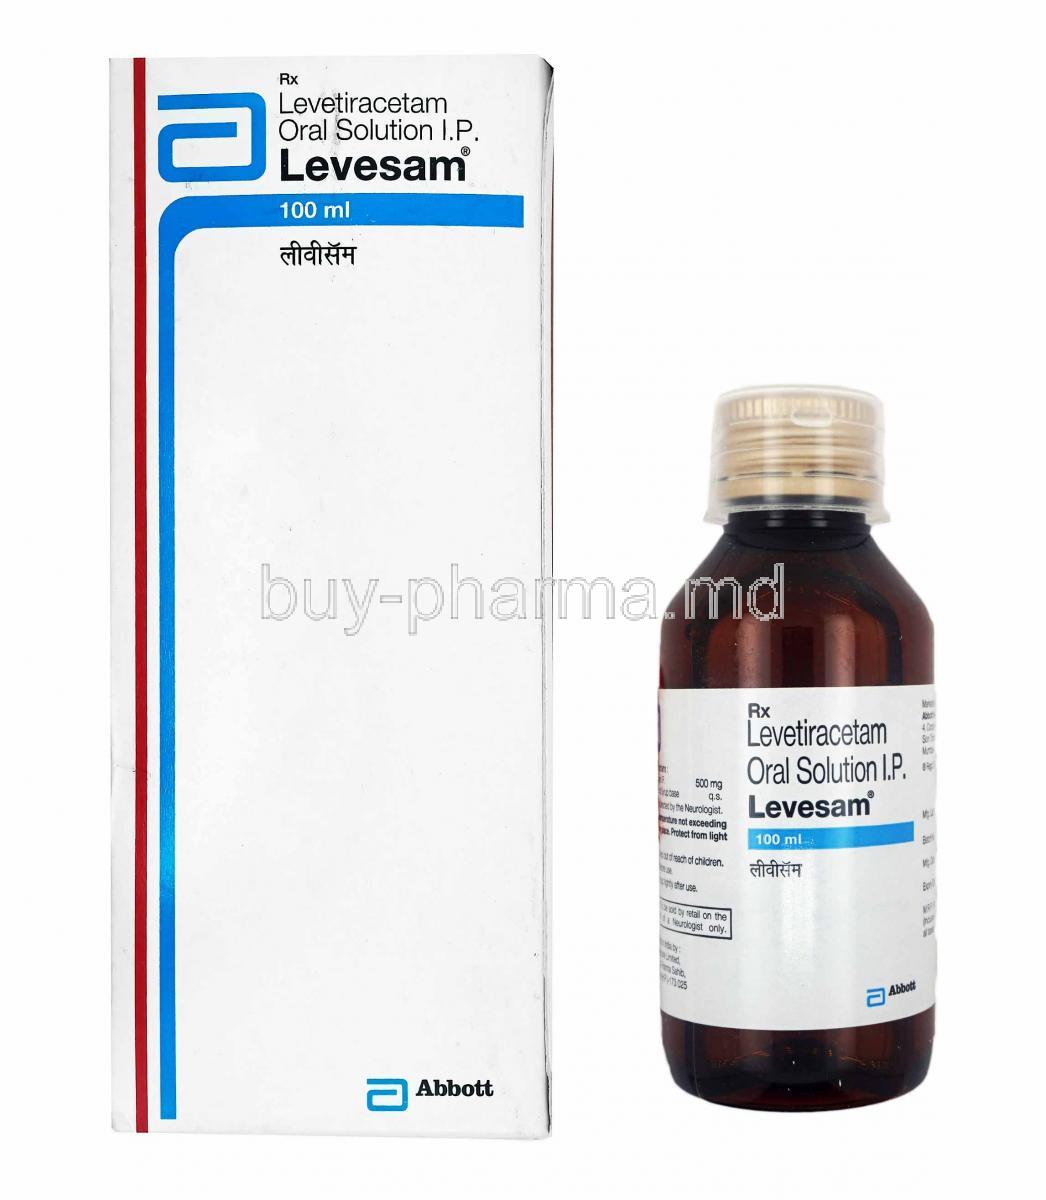 Levesam Oral Solution, Levetiracetam box and bottle